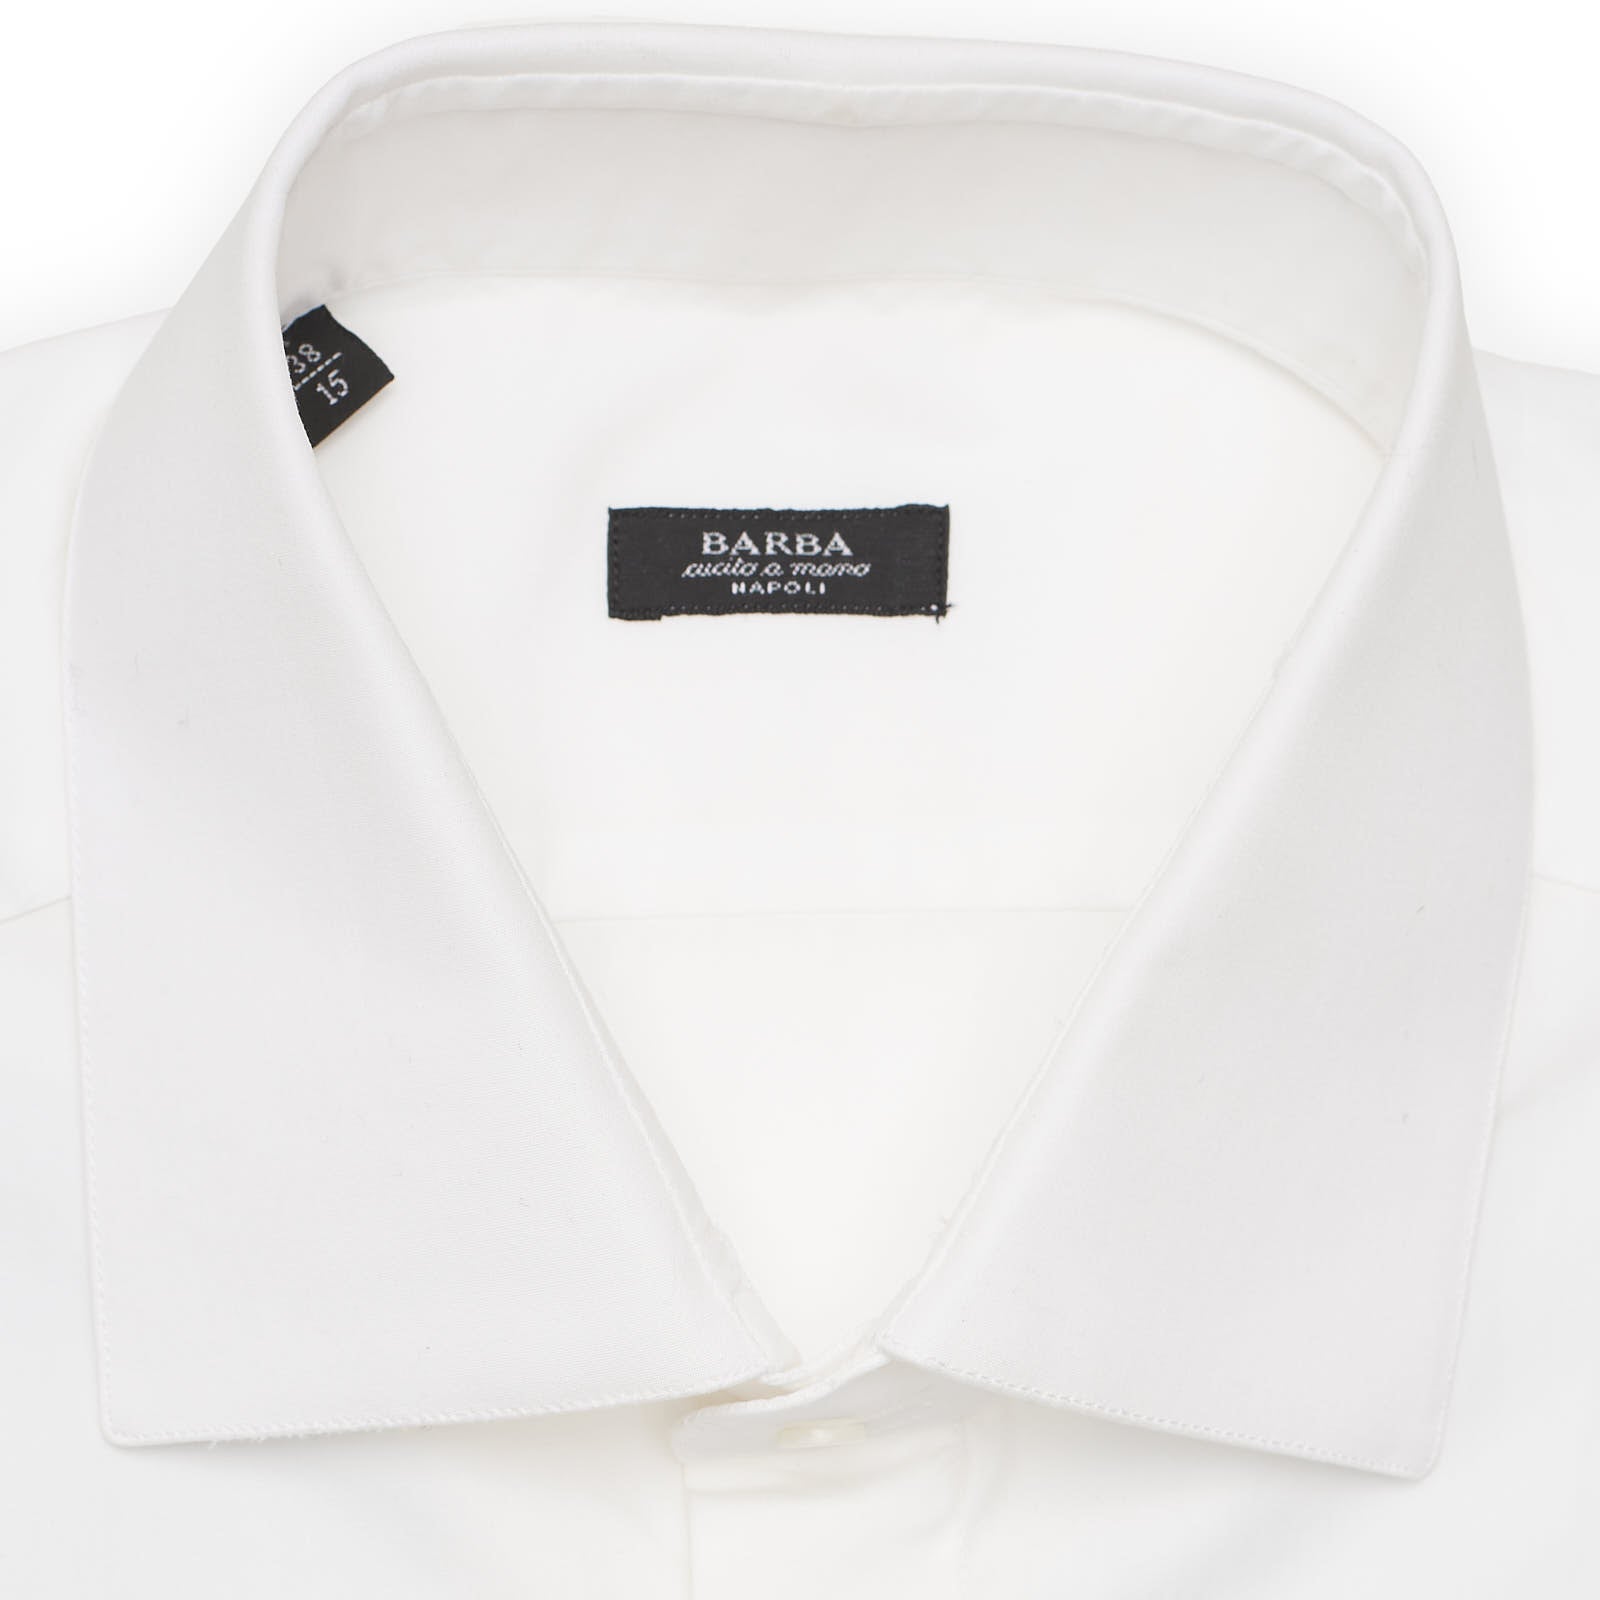 BARBA Napoli Handmade White Cotton Dress Shirt EU 38 NEW US 15